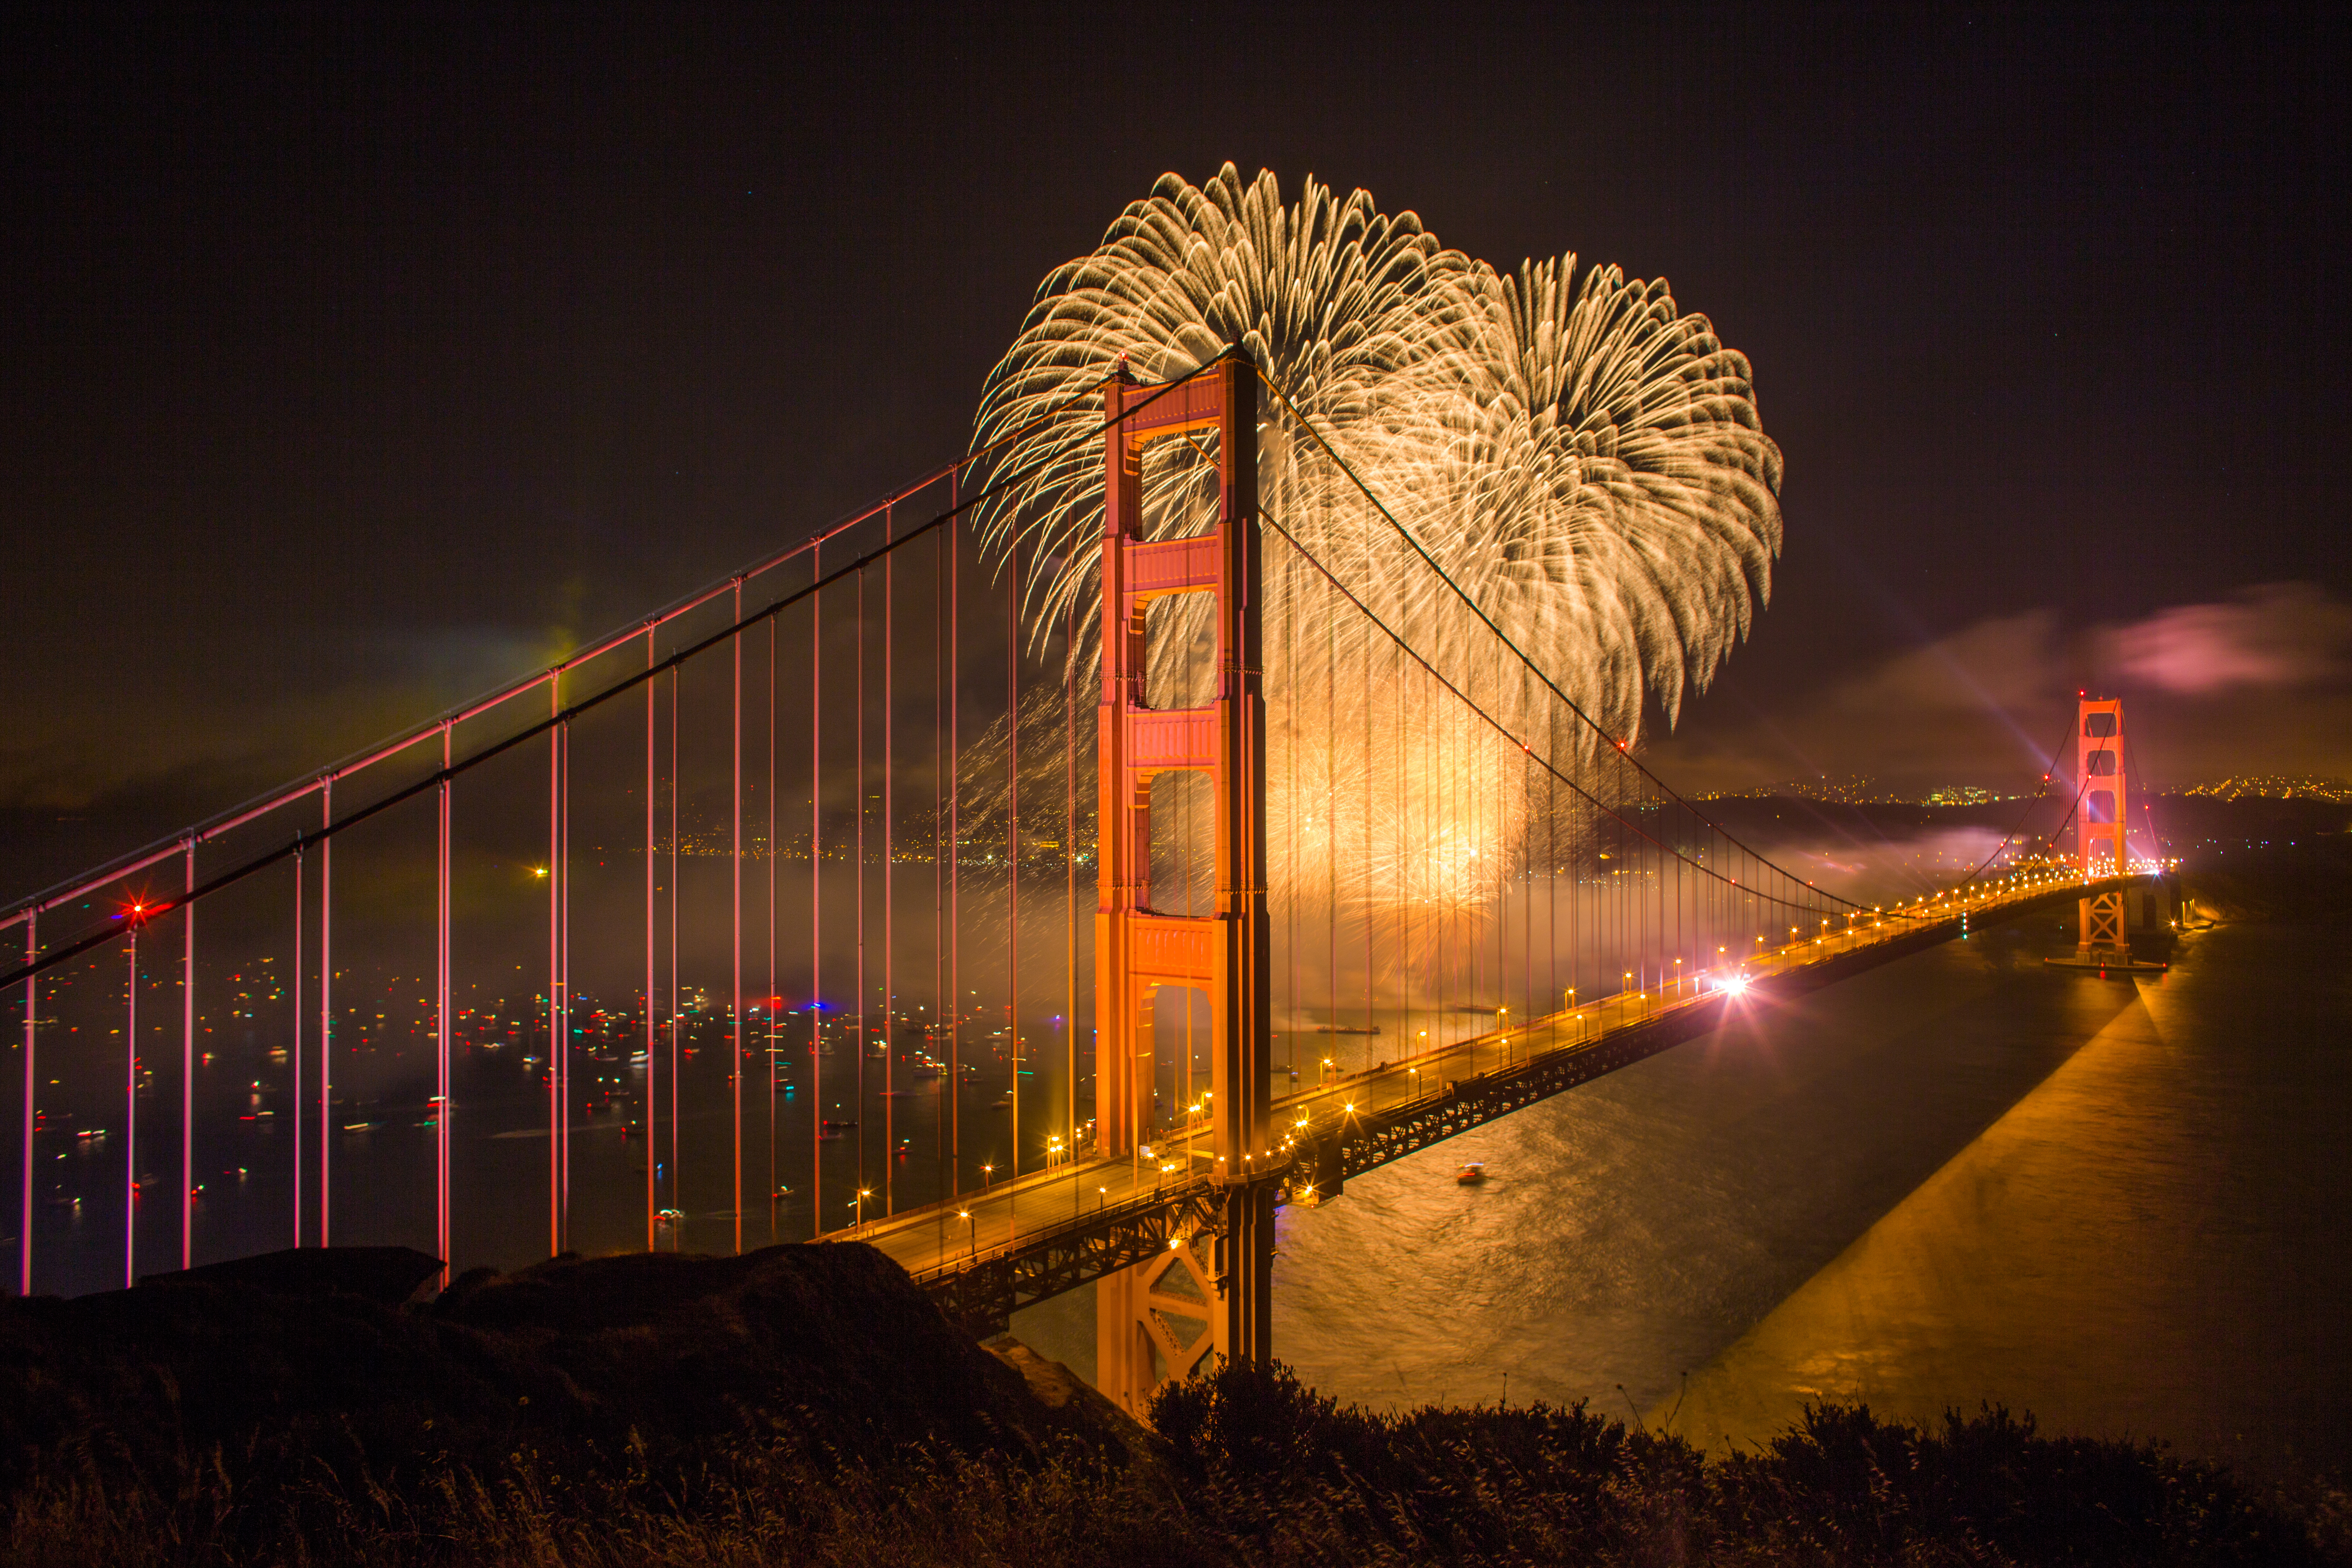 Golden Gate Bridge against the backdrop of fireworks